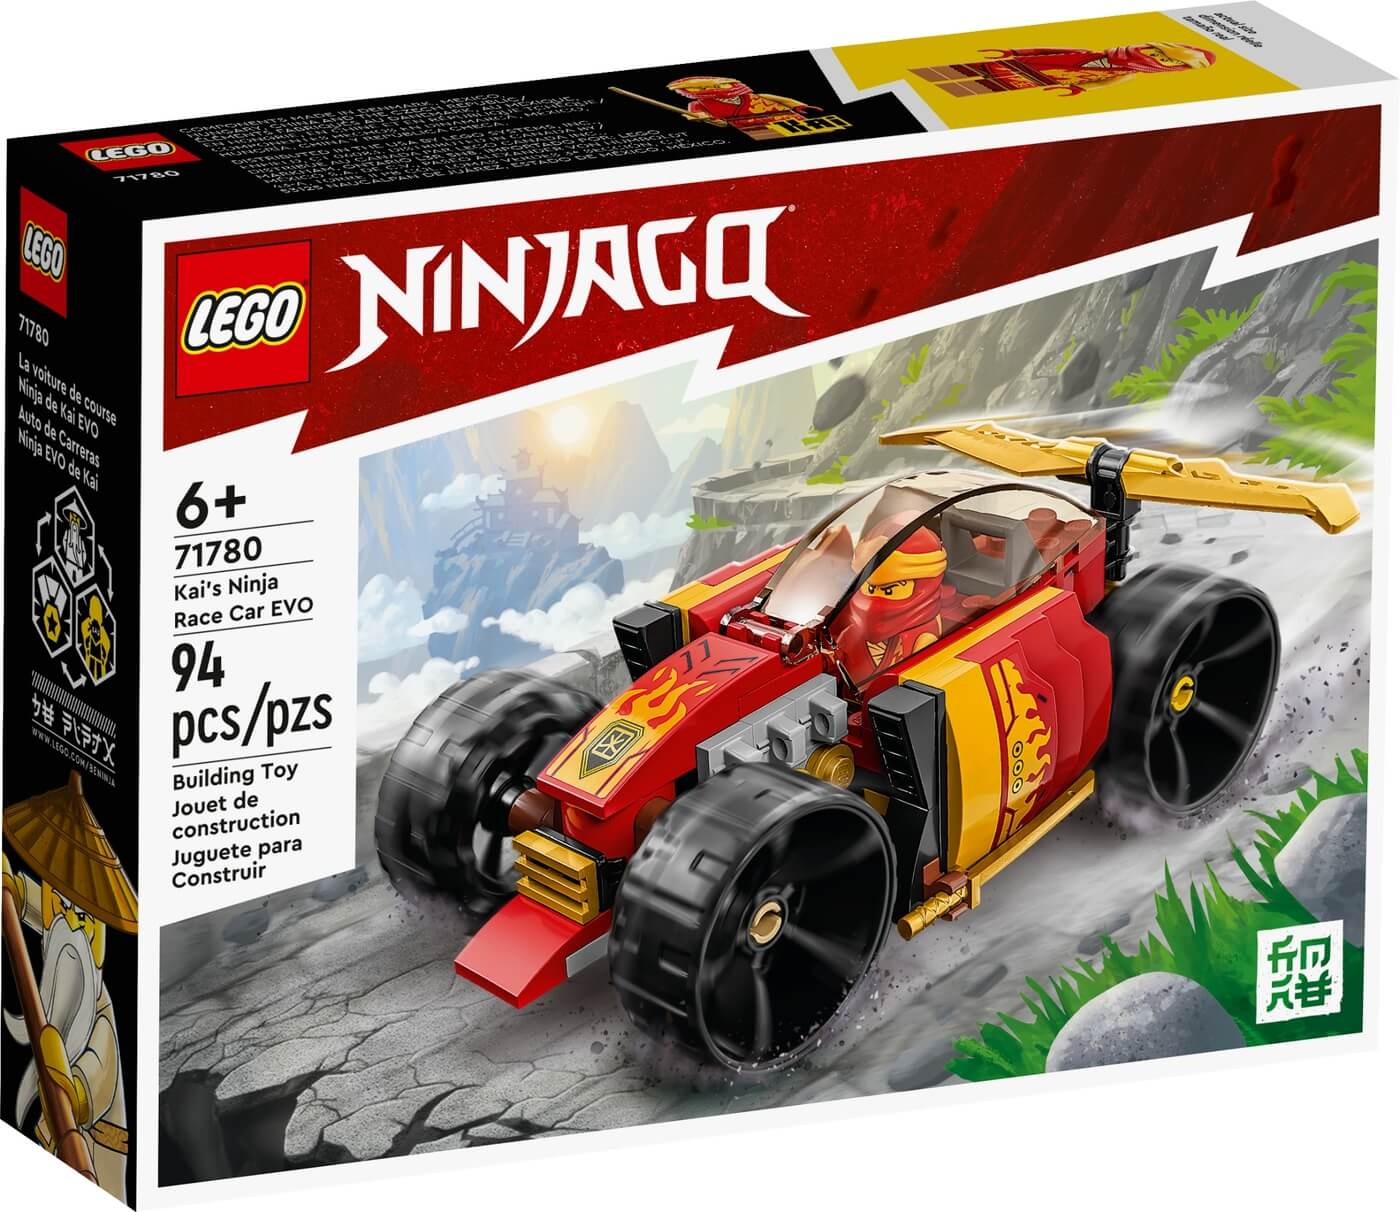 Coche de Carreras Ninja EVO de Kai ( Lego 71780 ) imagen e